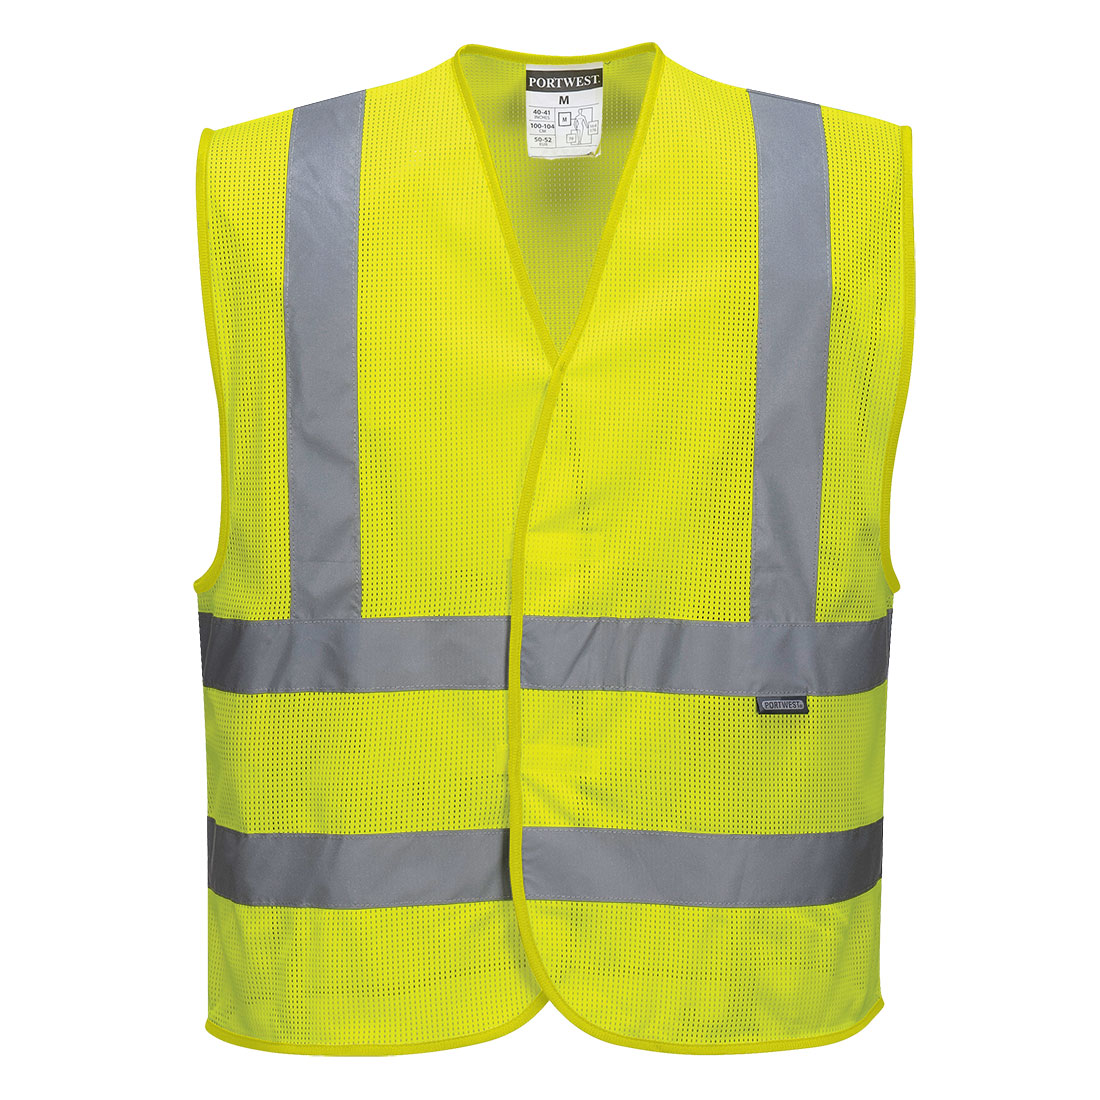 MeshAir Band & Brace Vest Size S/M Yellow